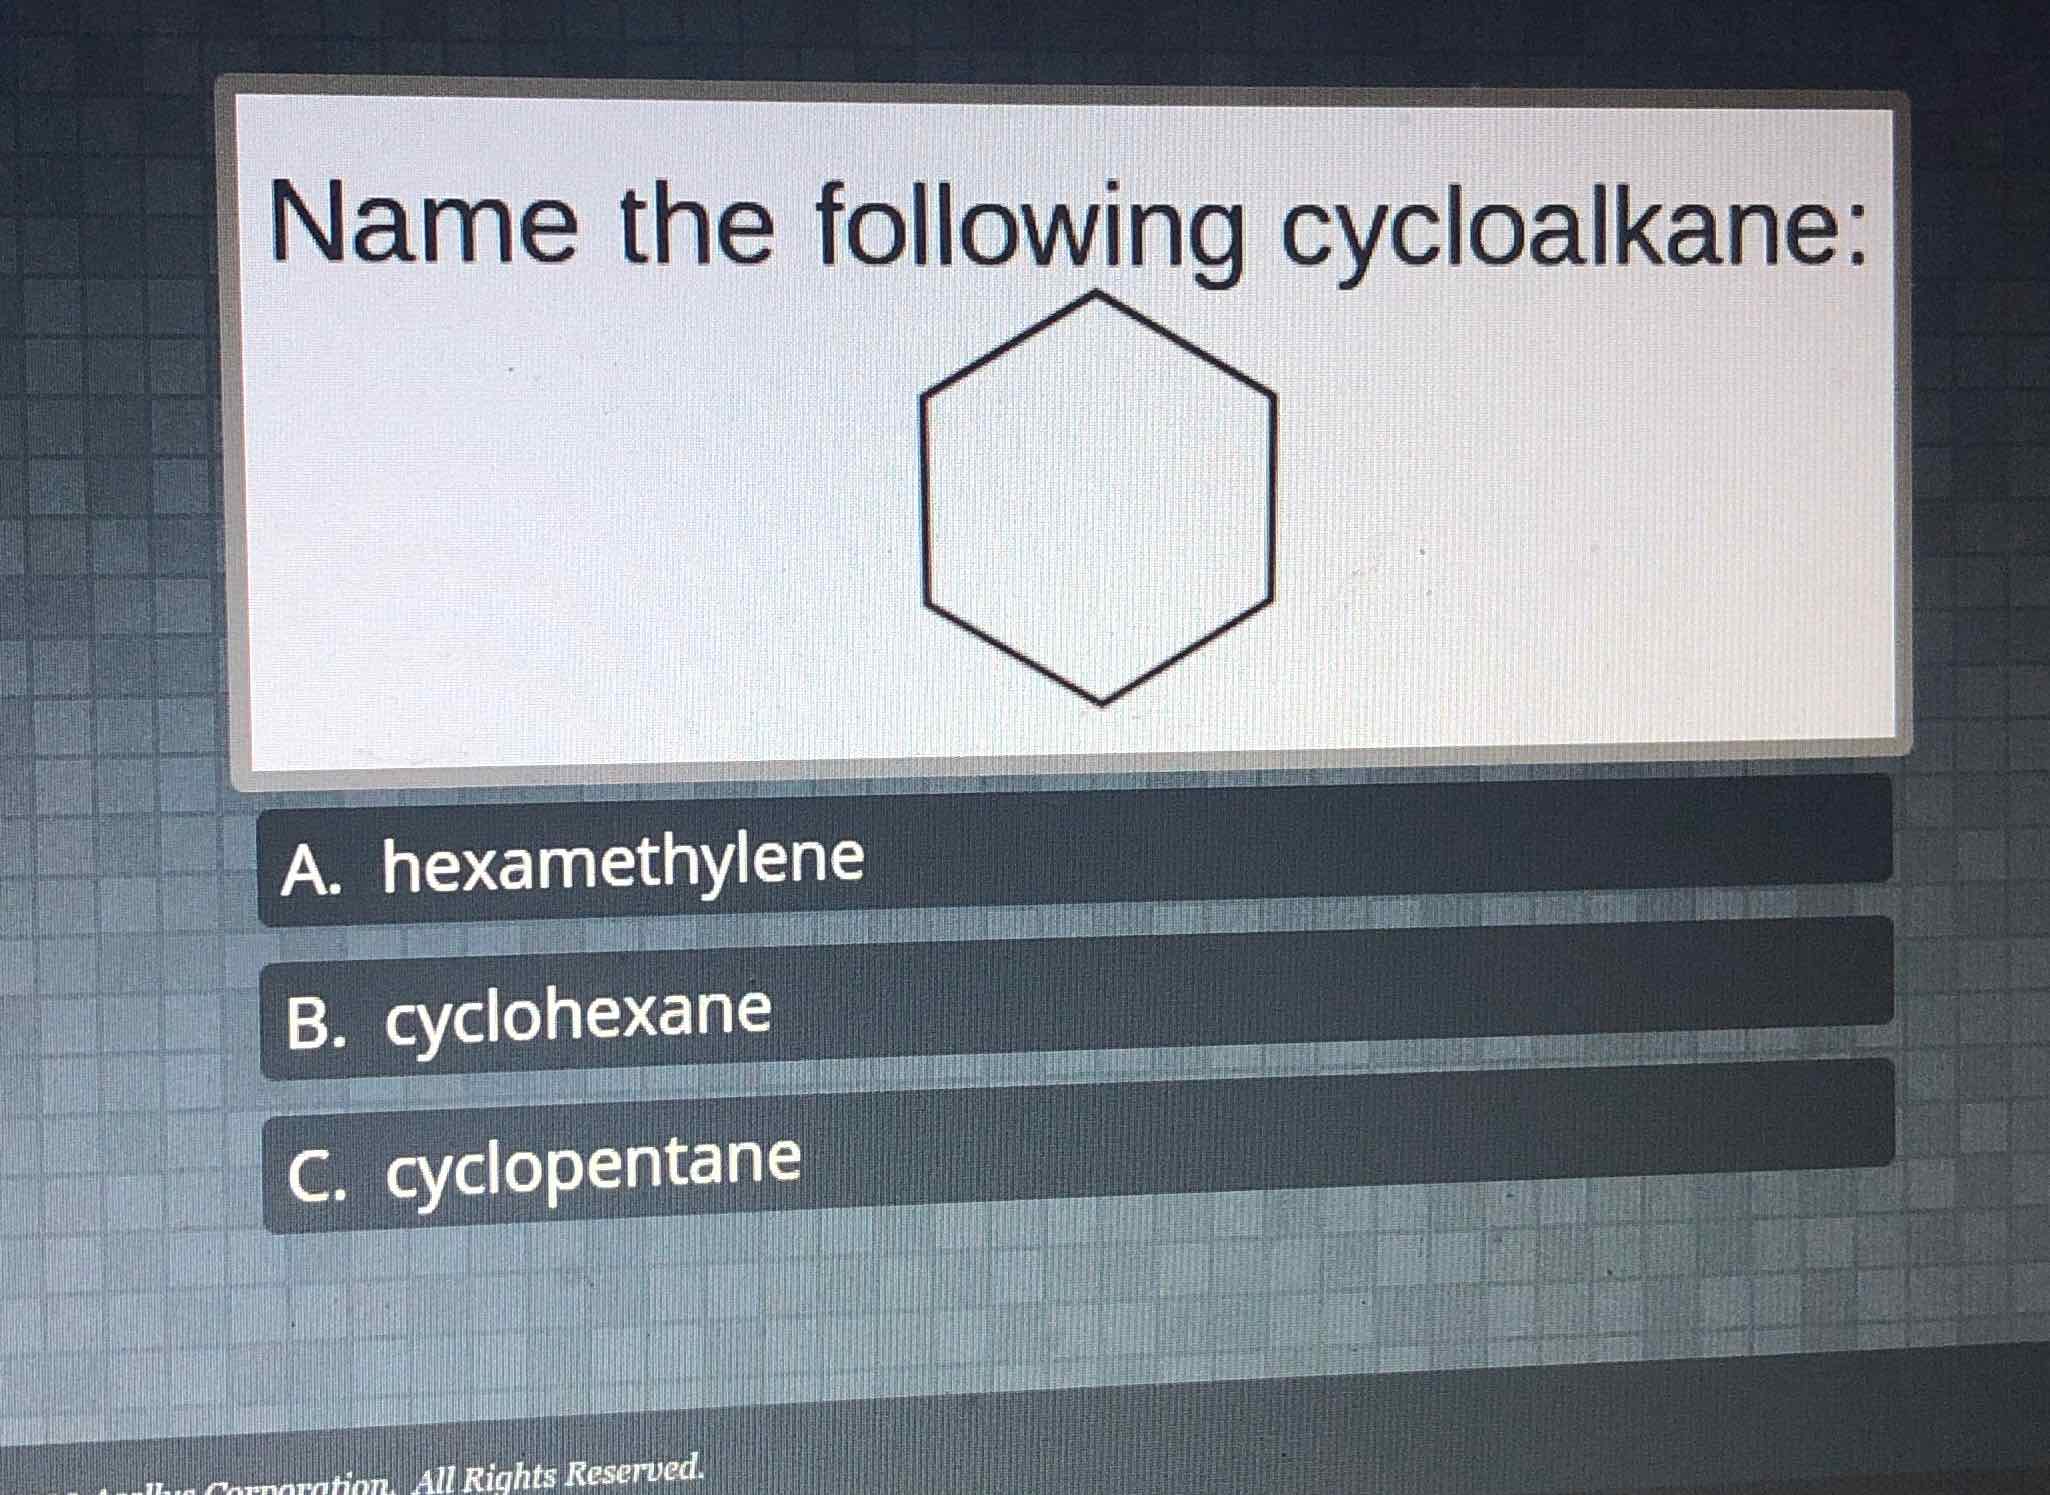 Name the following cycloalkane:
A. hexamethylene
B. cyclohexane
C. cyclopentane